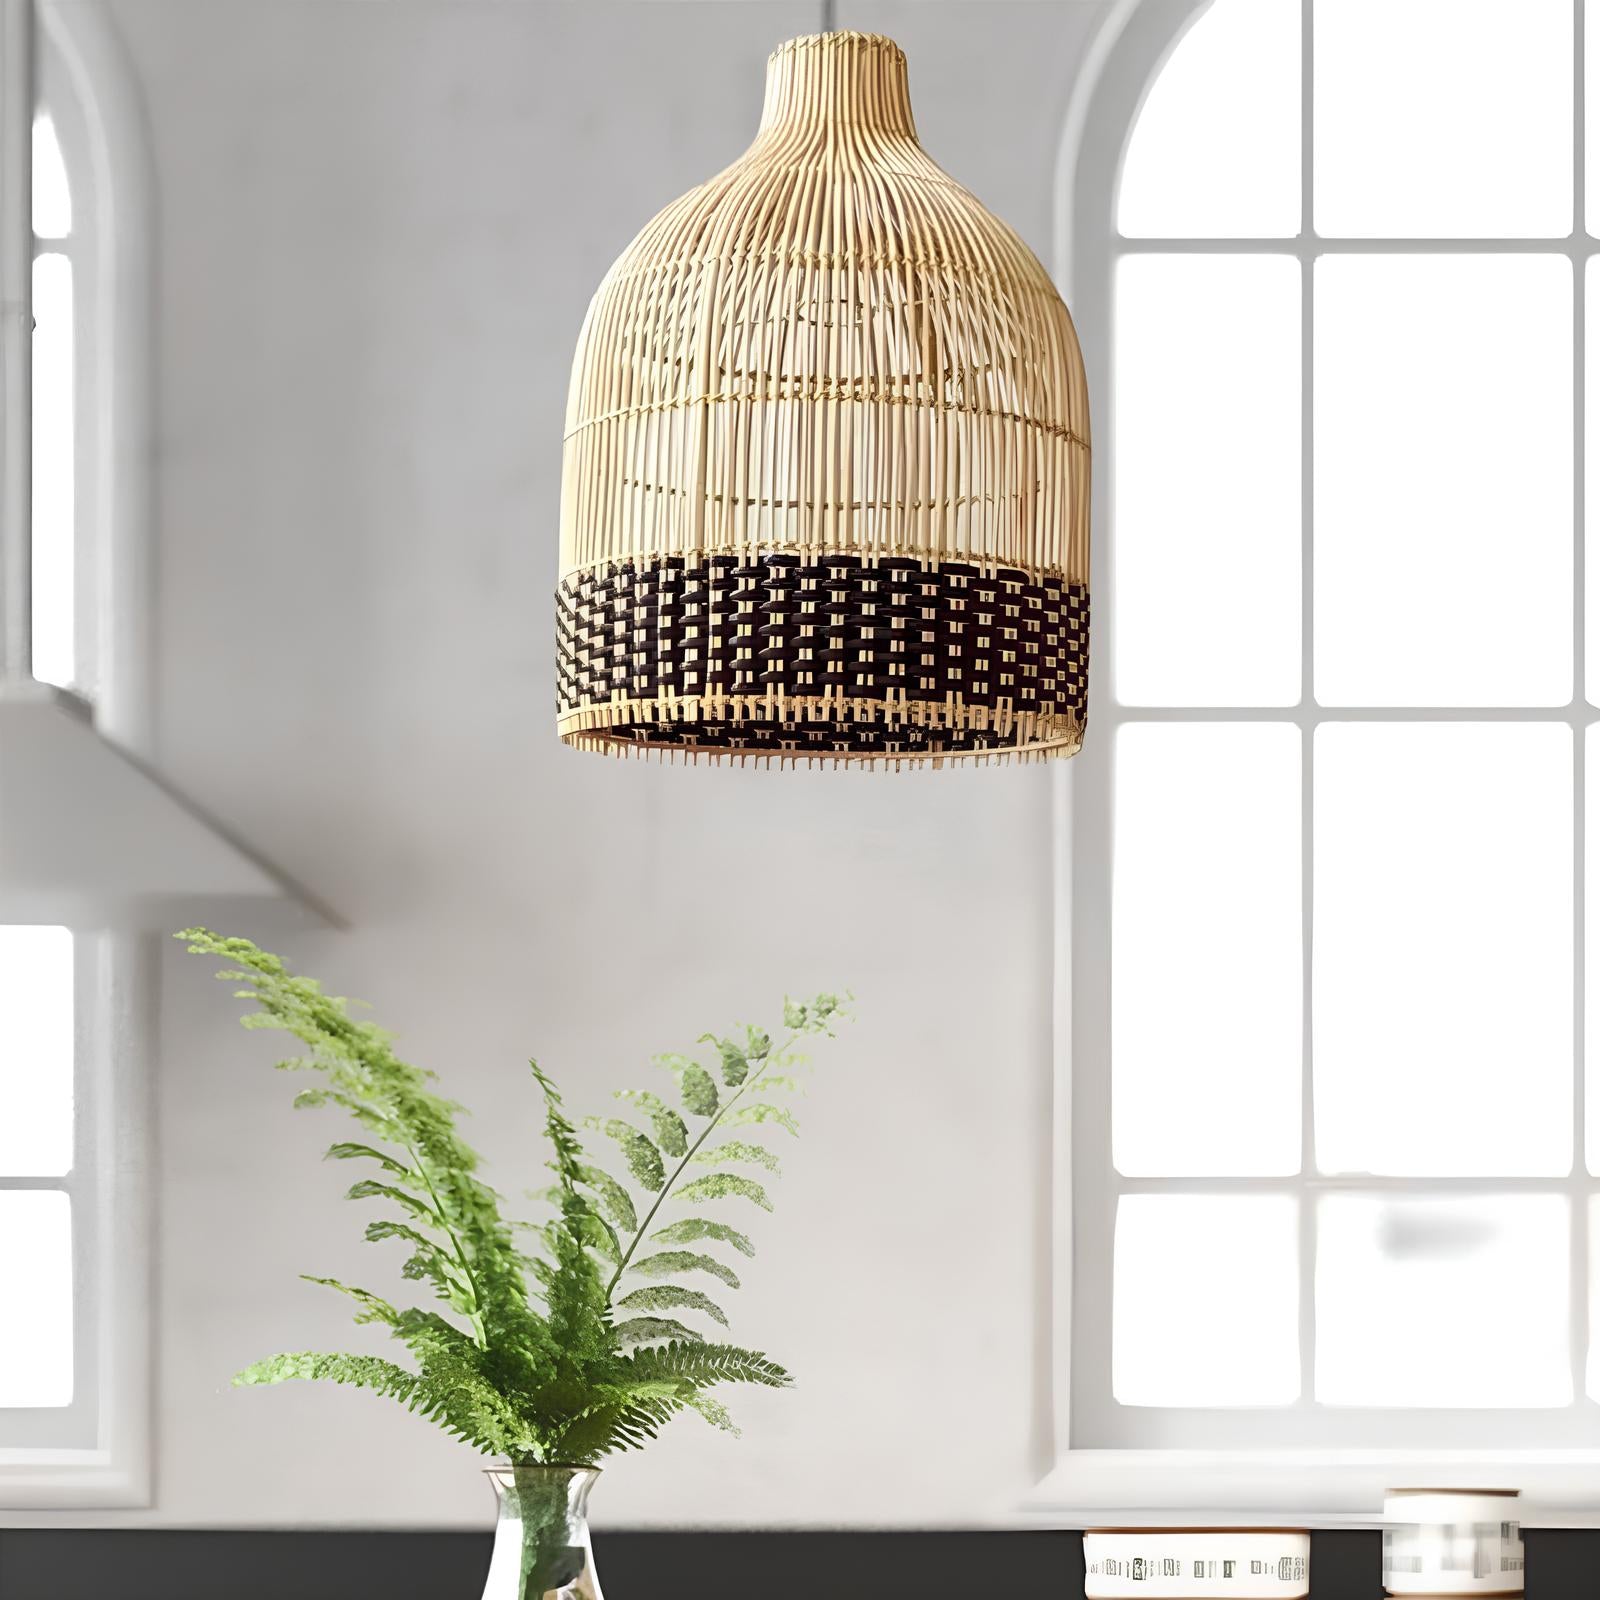 Bamboo Hanging lamp for Living Room | Rattan Pendant light | Cane ceiling light - Nimit - Akway